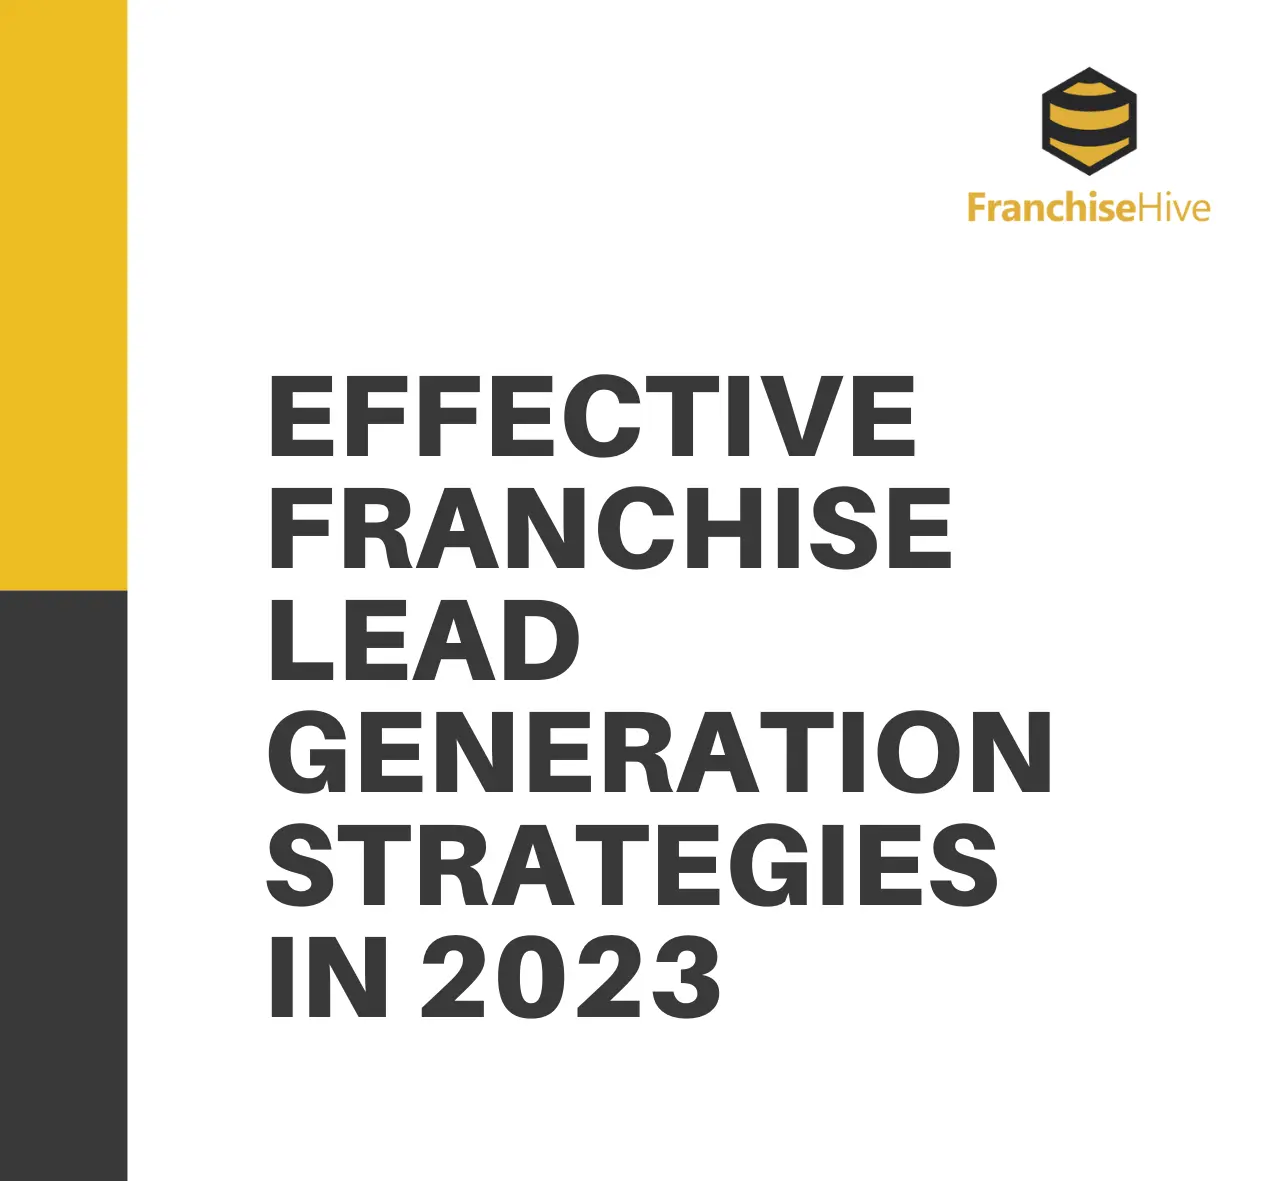 Effective Franchise Lead Generation Strategies in 2023